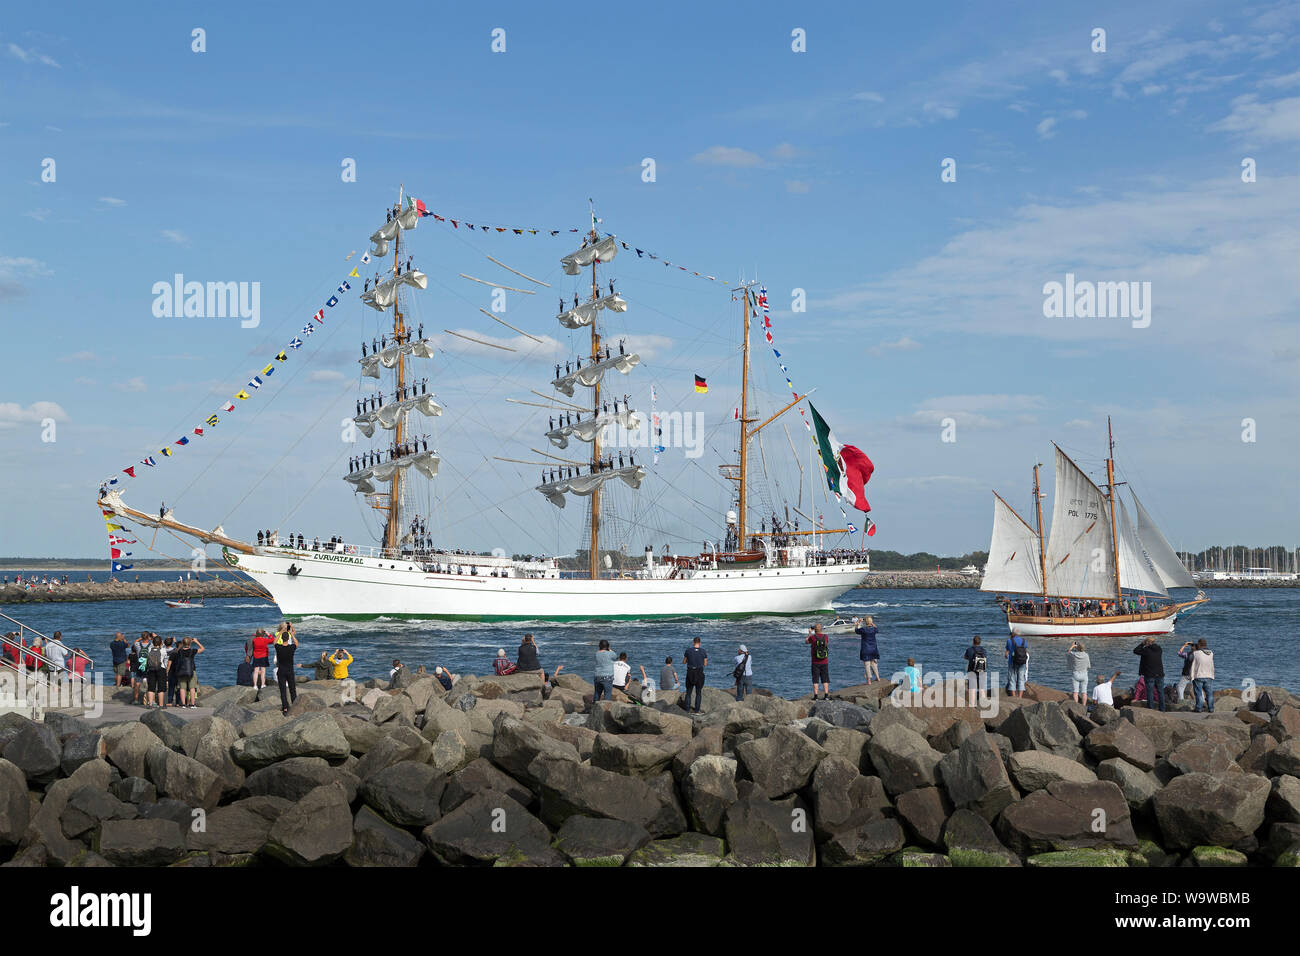 Mexican bark Cuauhtemoc leaving Hanse-Sail with sailors standing on the masts, Warnemünde, Rostock, Mecklenburg-West Pomerania, Germany Stock Photo